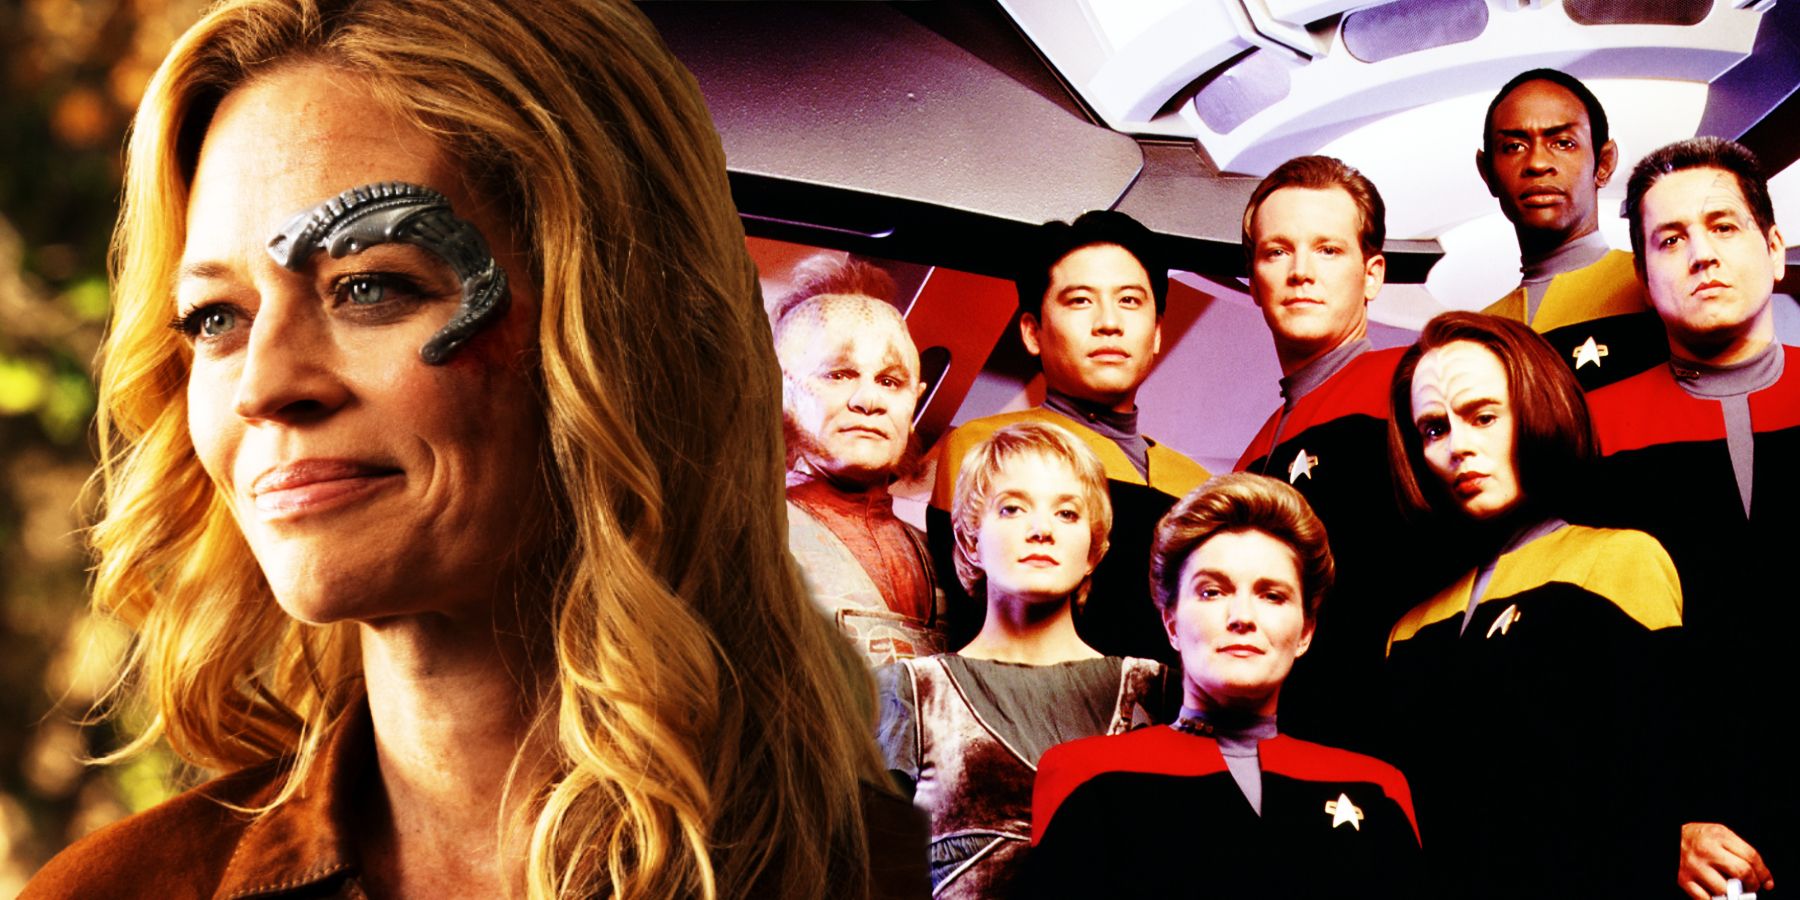 Star Trek: Voyager Cut “Closure” To Kes & Neelix Relationship, Says Ethan Phillips